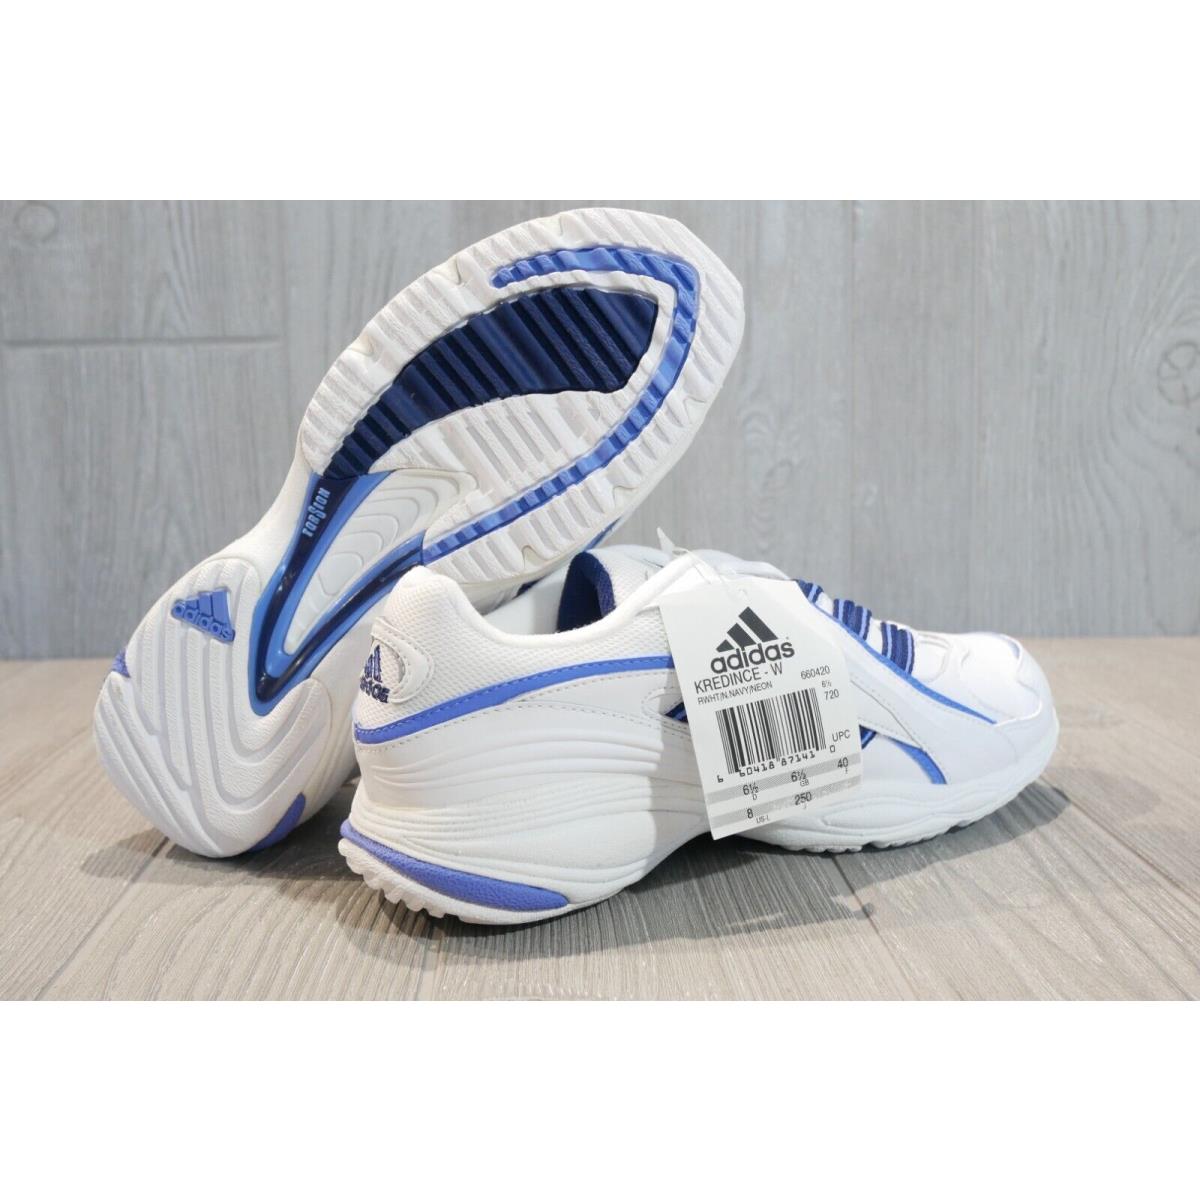 Adidas shoes Kredince - White 4